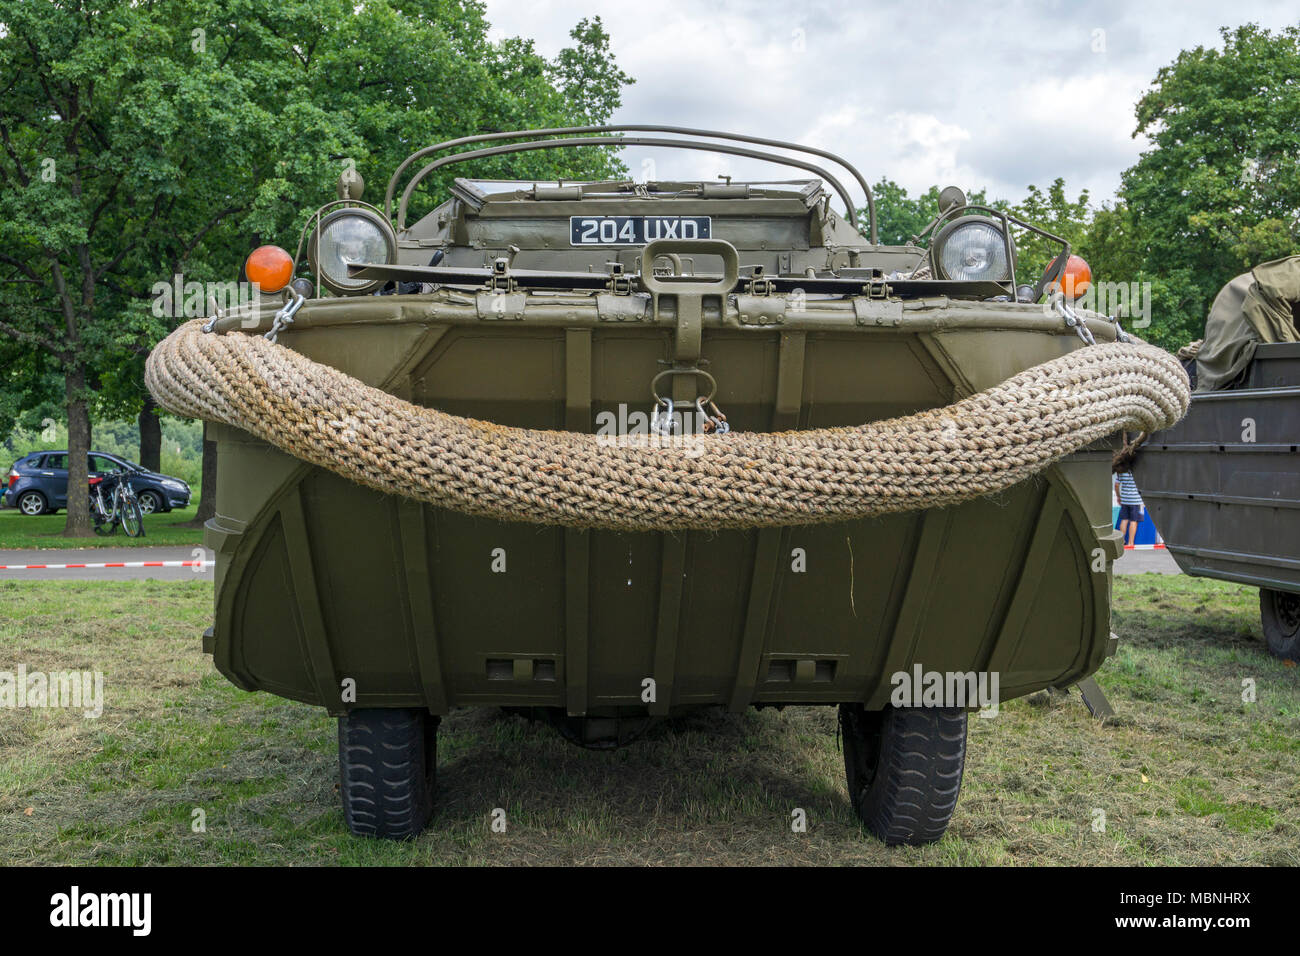 Military amphibious vehicle at Moselle river, Neumagen-Dhron, Rhineland-Palatinate, Germany Stock Photo